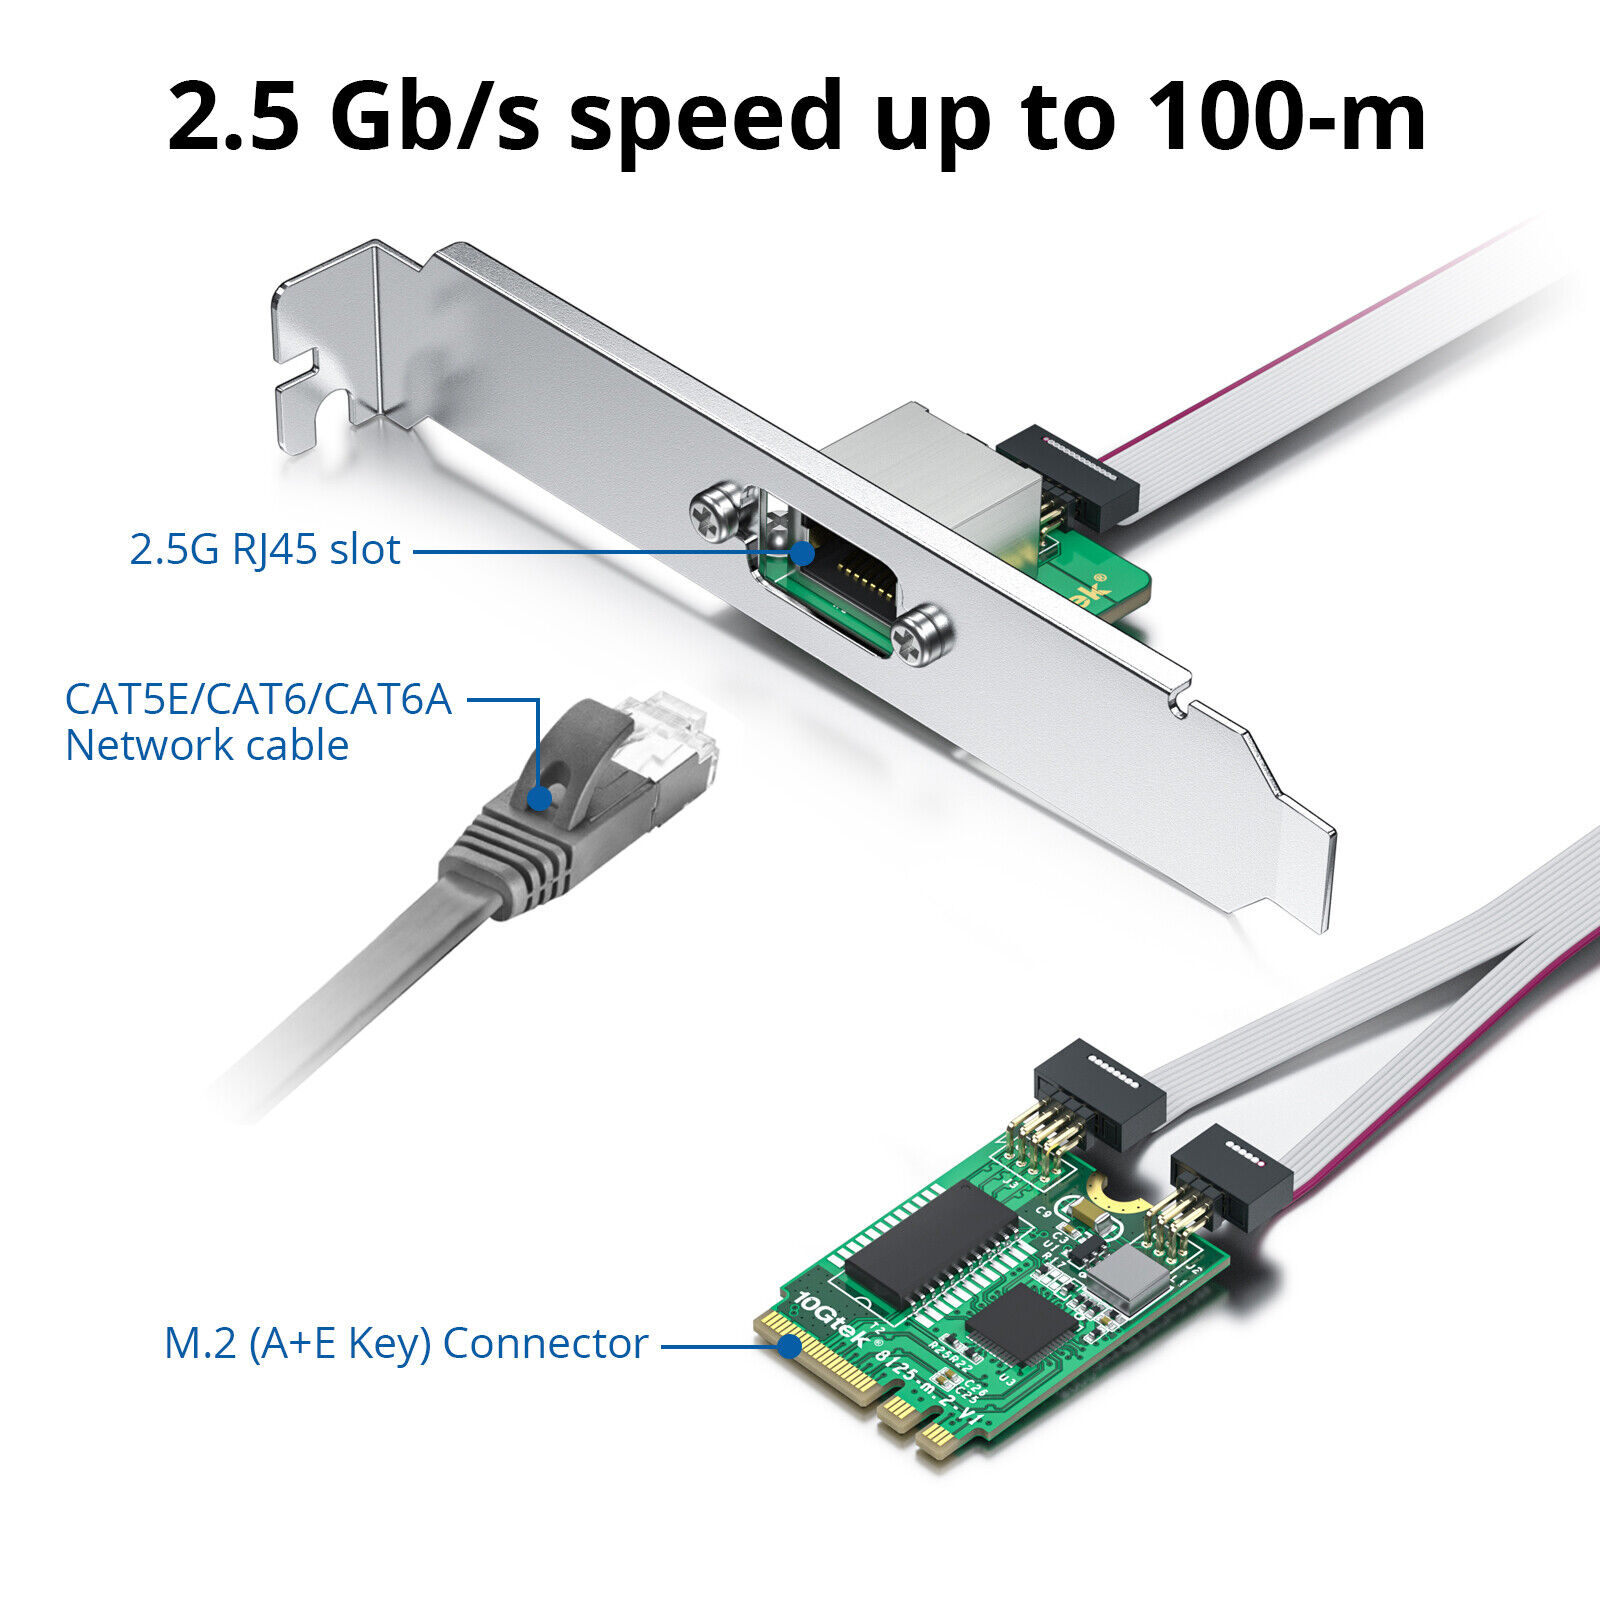 M.2 A+E Key 2.5G Gigabit Ethernet Network Card, 18-cm cable length